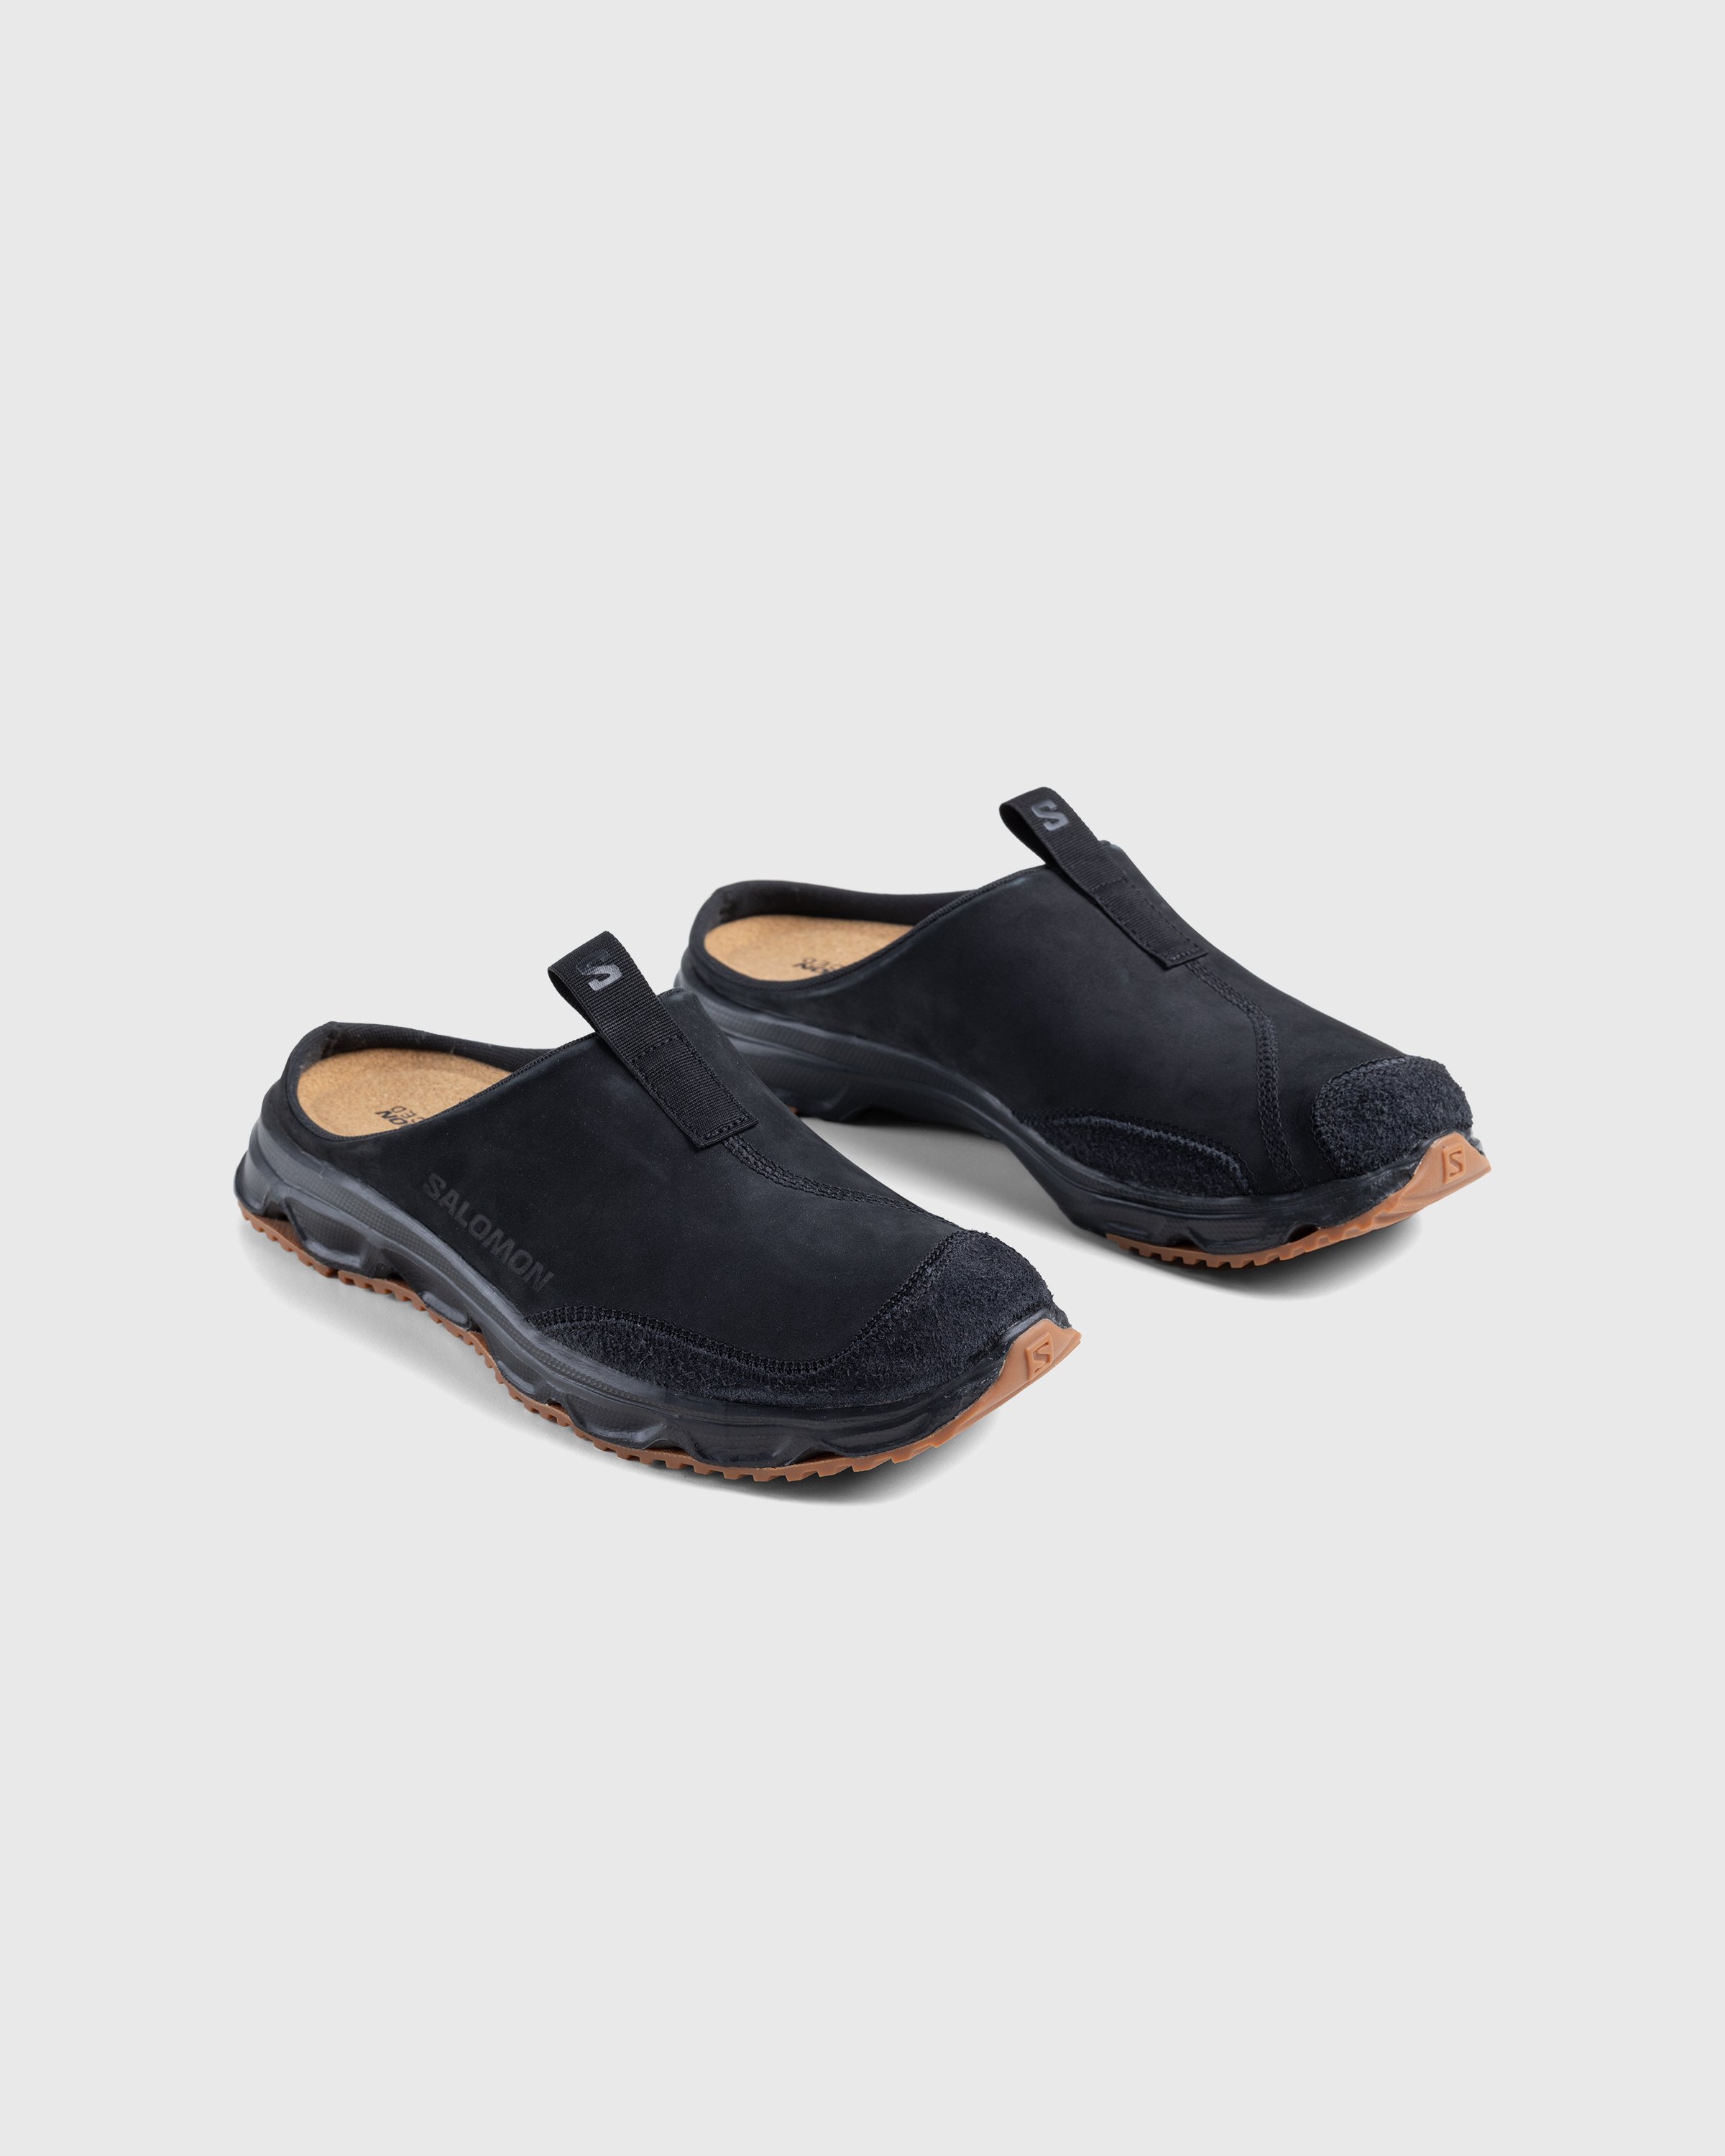 Salomon - RX Slide Leather Advanced Black - Footwear - Black - Image 3